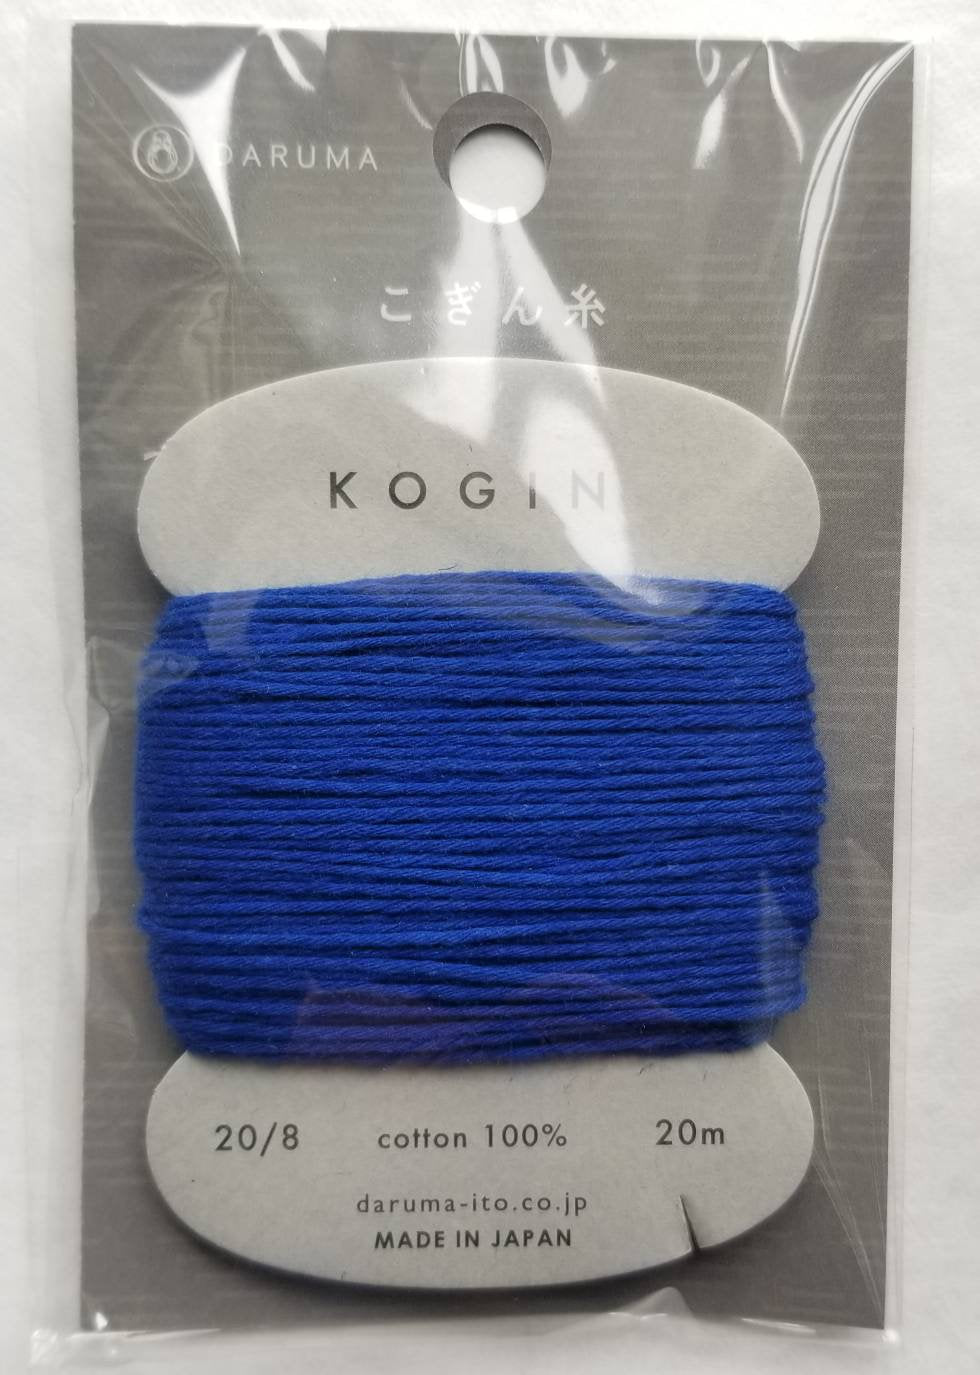 Daruma #6 ROYAL BLUE Japanese Cotton KOGIN thread 20 meter skein 20/8